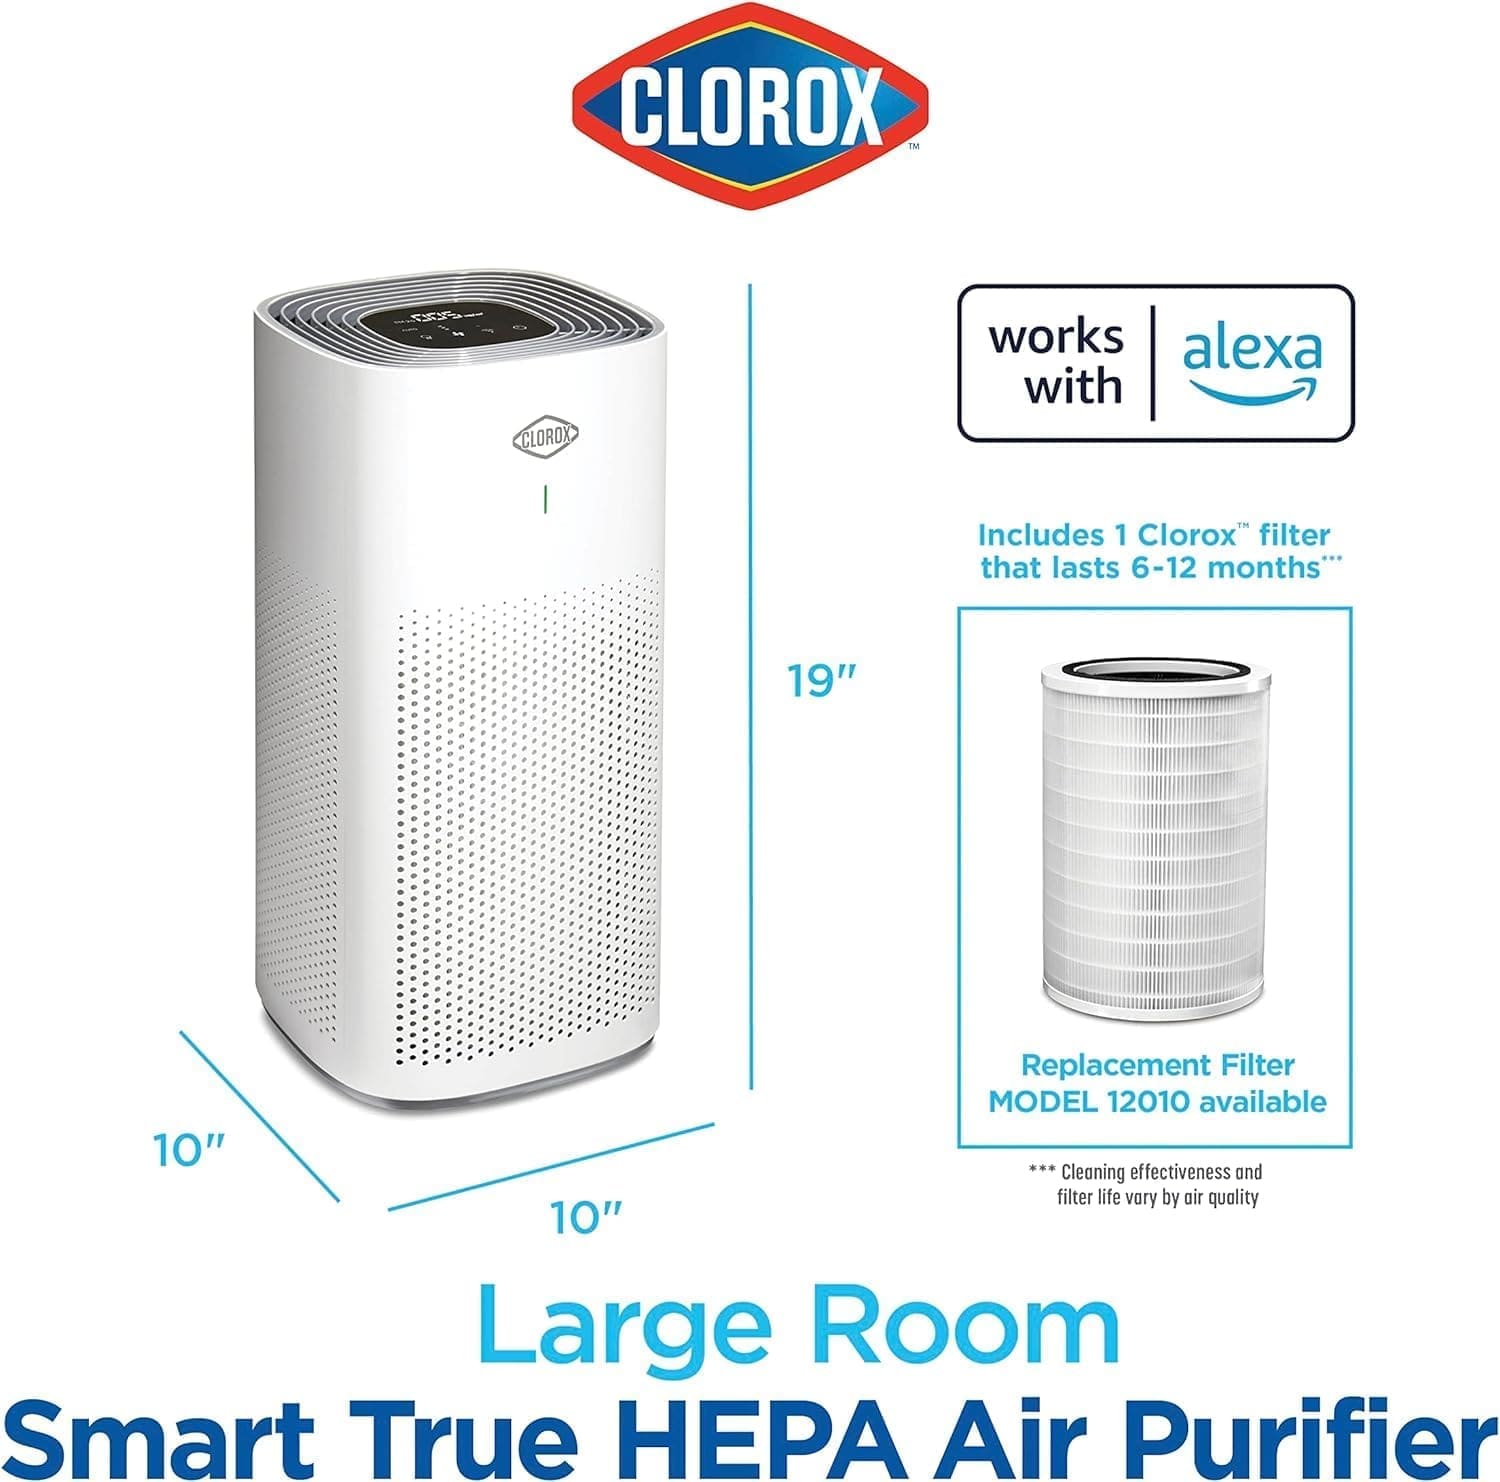 Clorox Smart Air Purifier Review